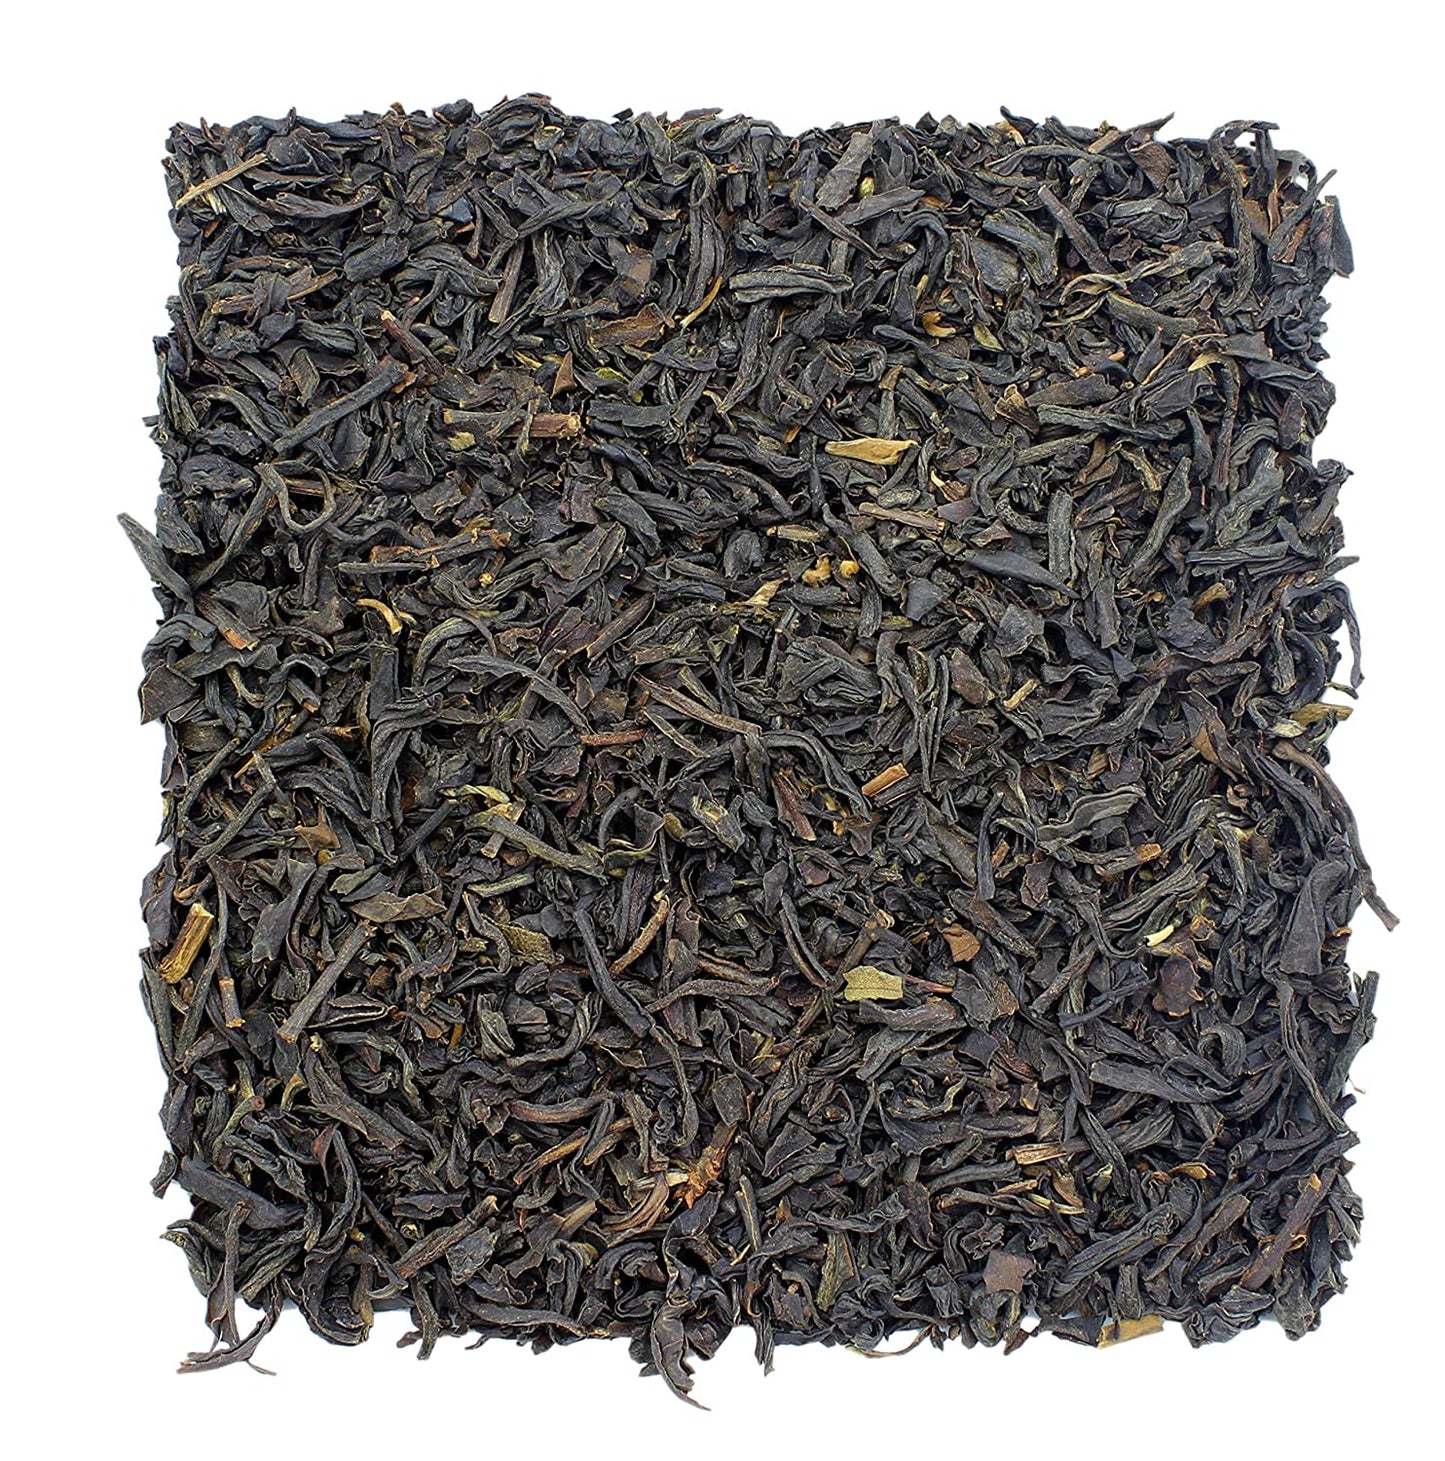 China Black Tea